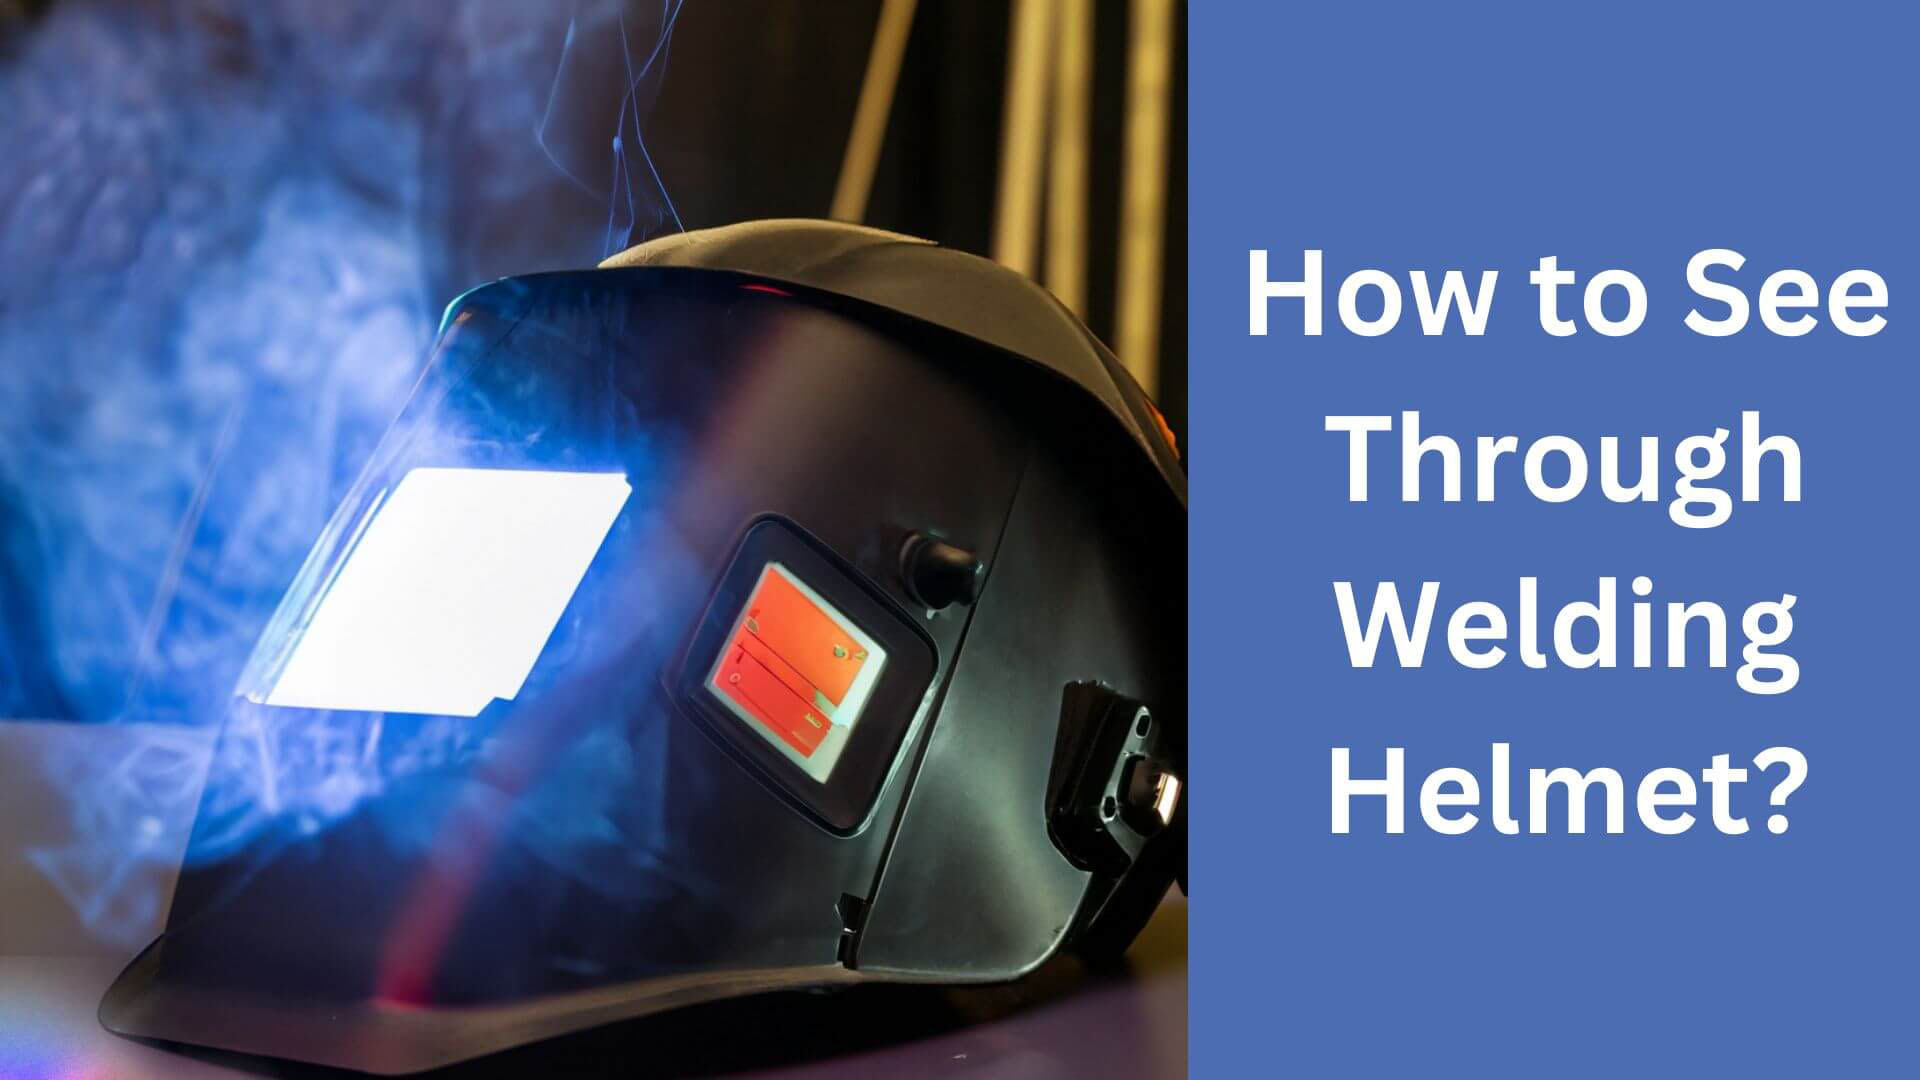 How to See Through Welding Helmet?